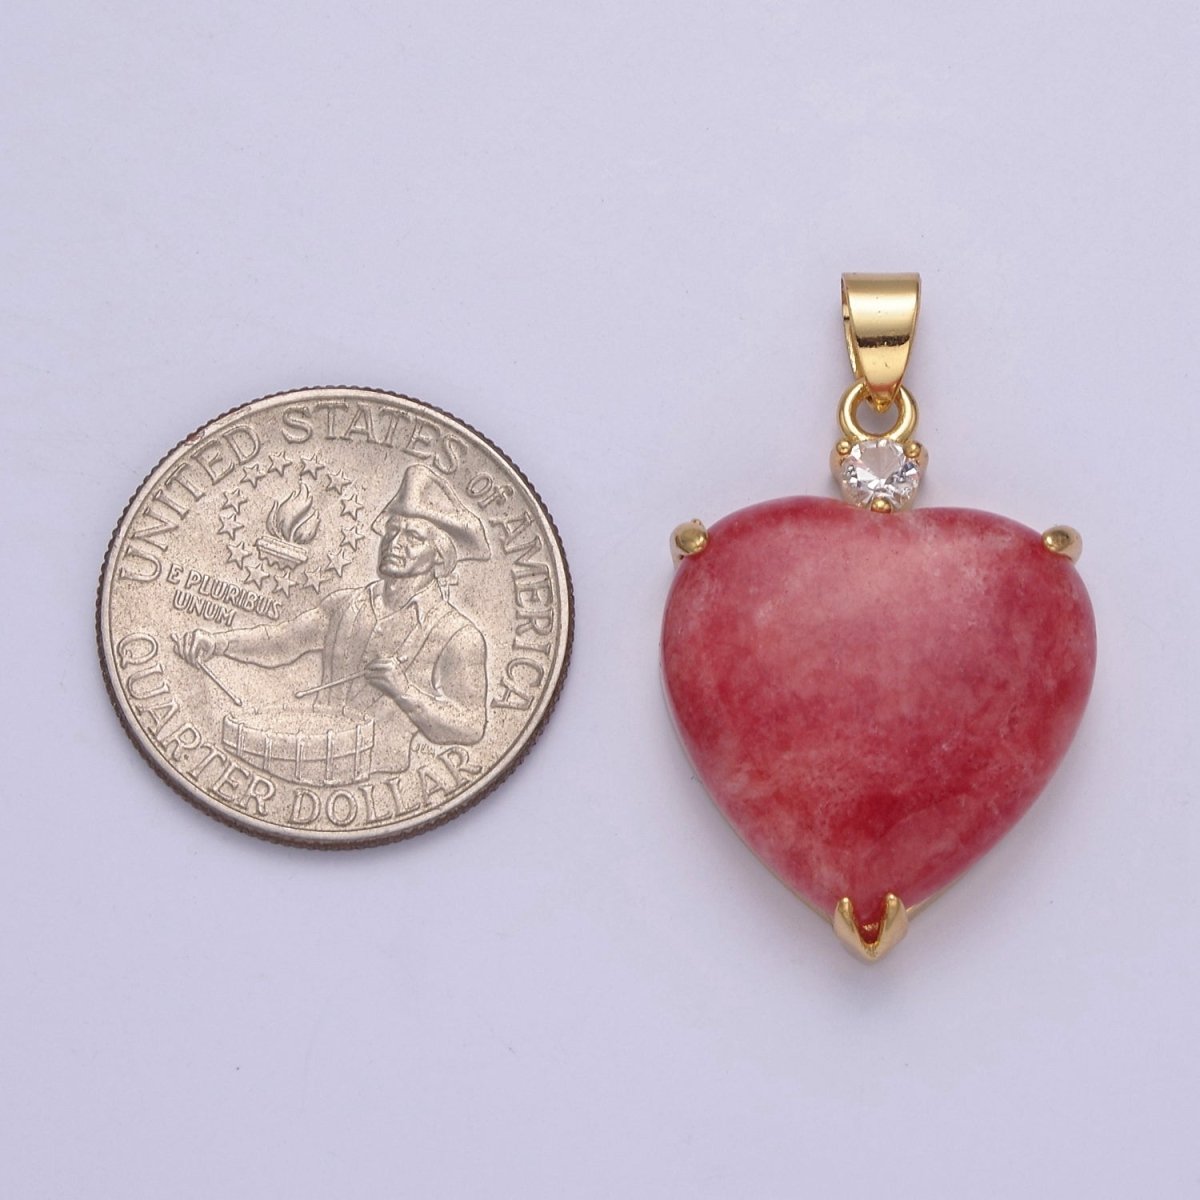 14k Gold Filled Jade Heart Pendant Puffy Heart Charm W-625~W-628 - DLUXCA